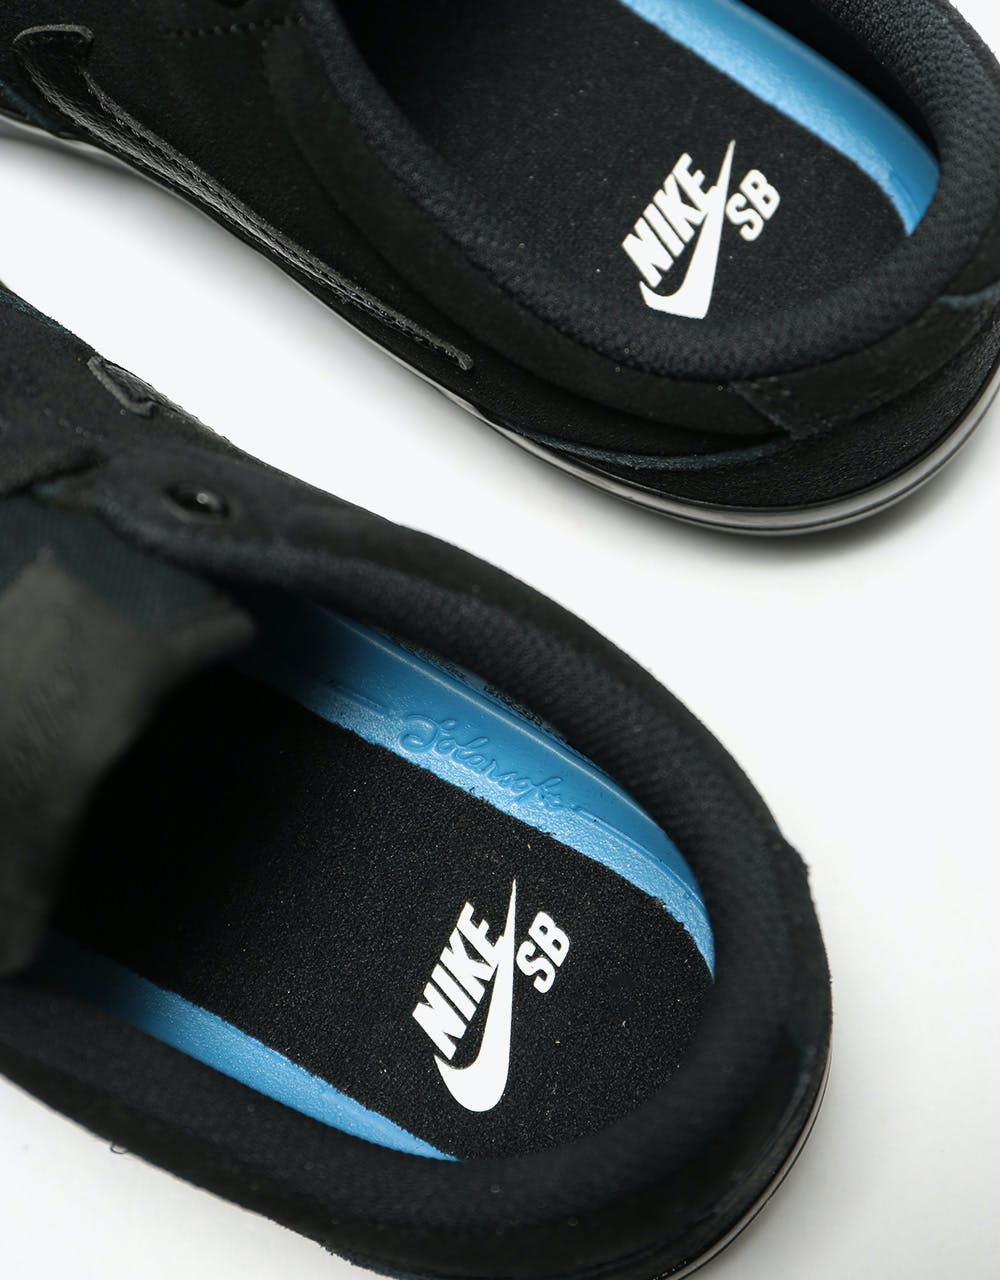 Nike SB Charge Suede Skate Shoes - Black/Black-Black